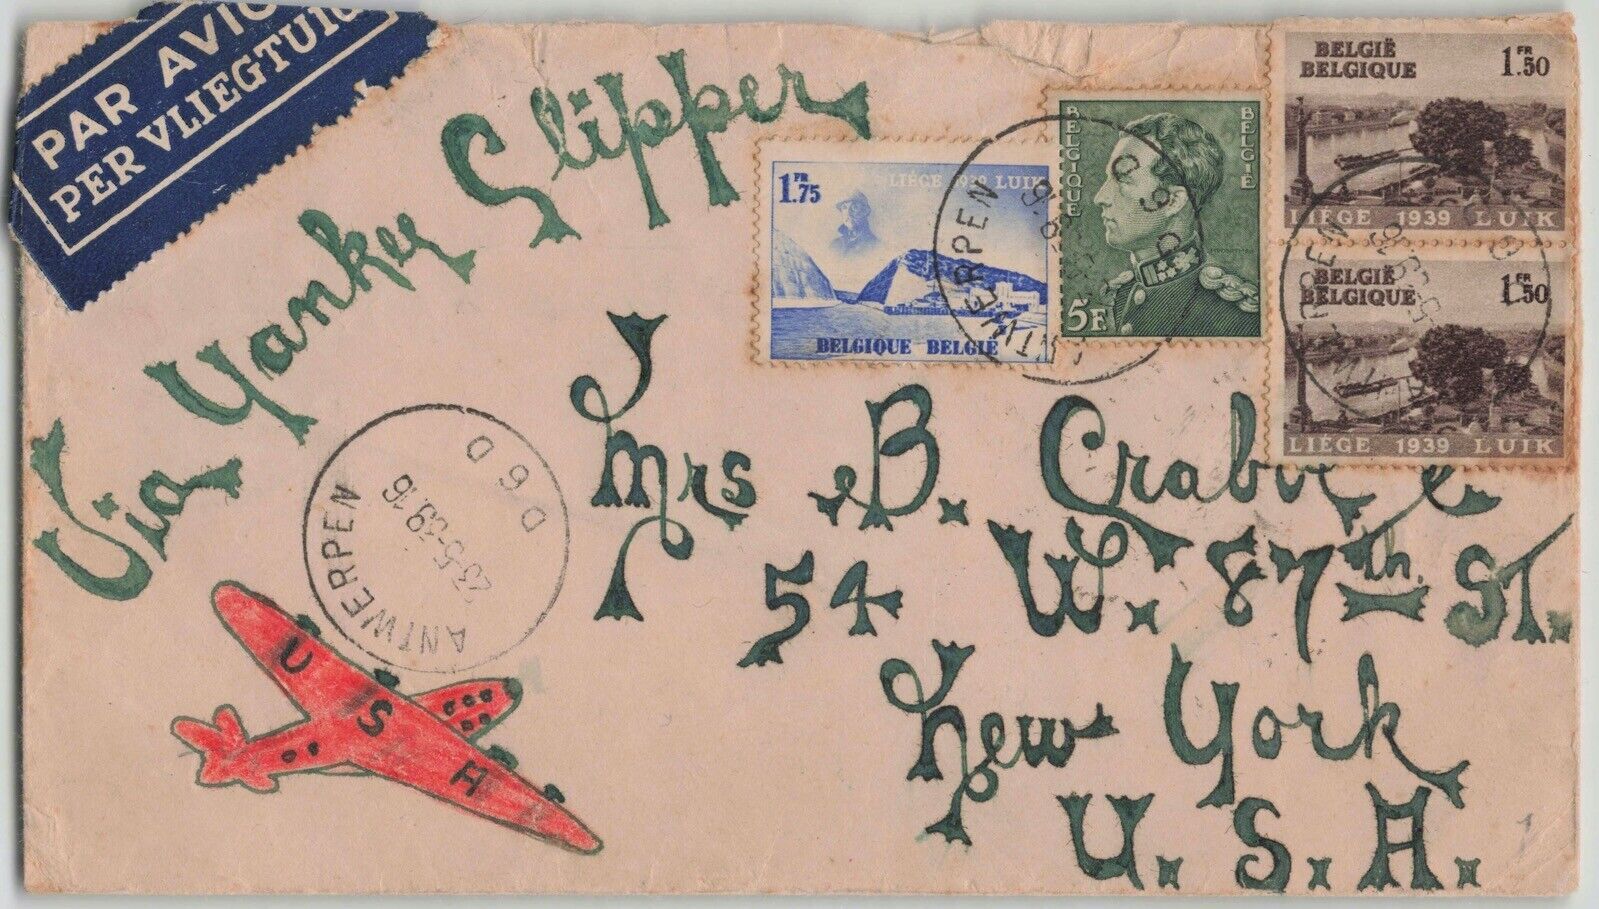 First Mail: Yankee Clipper